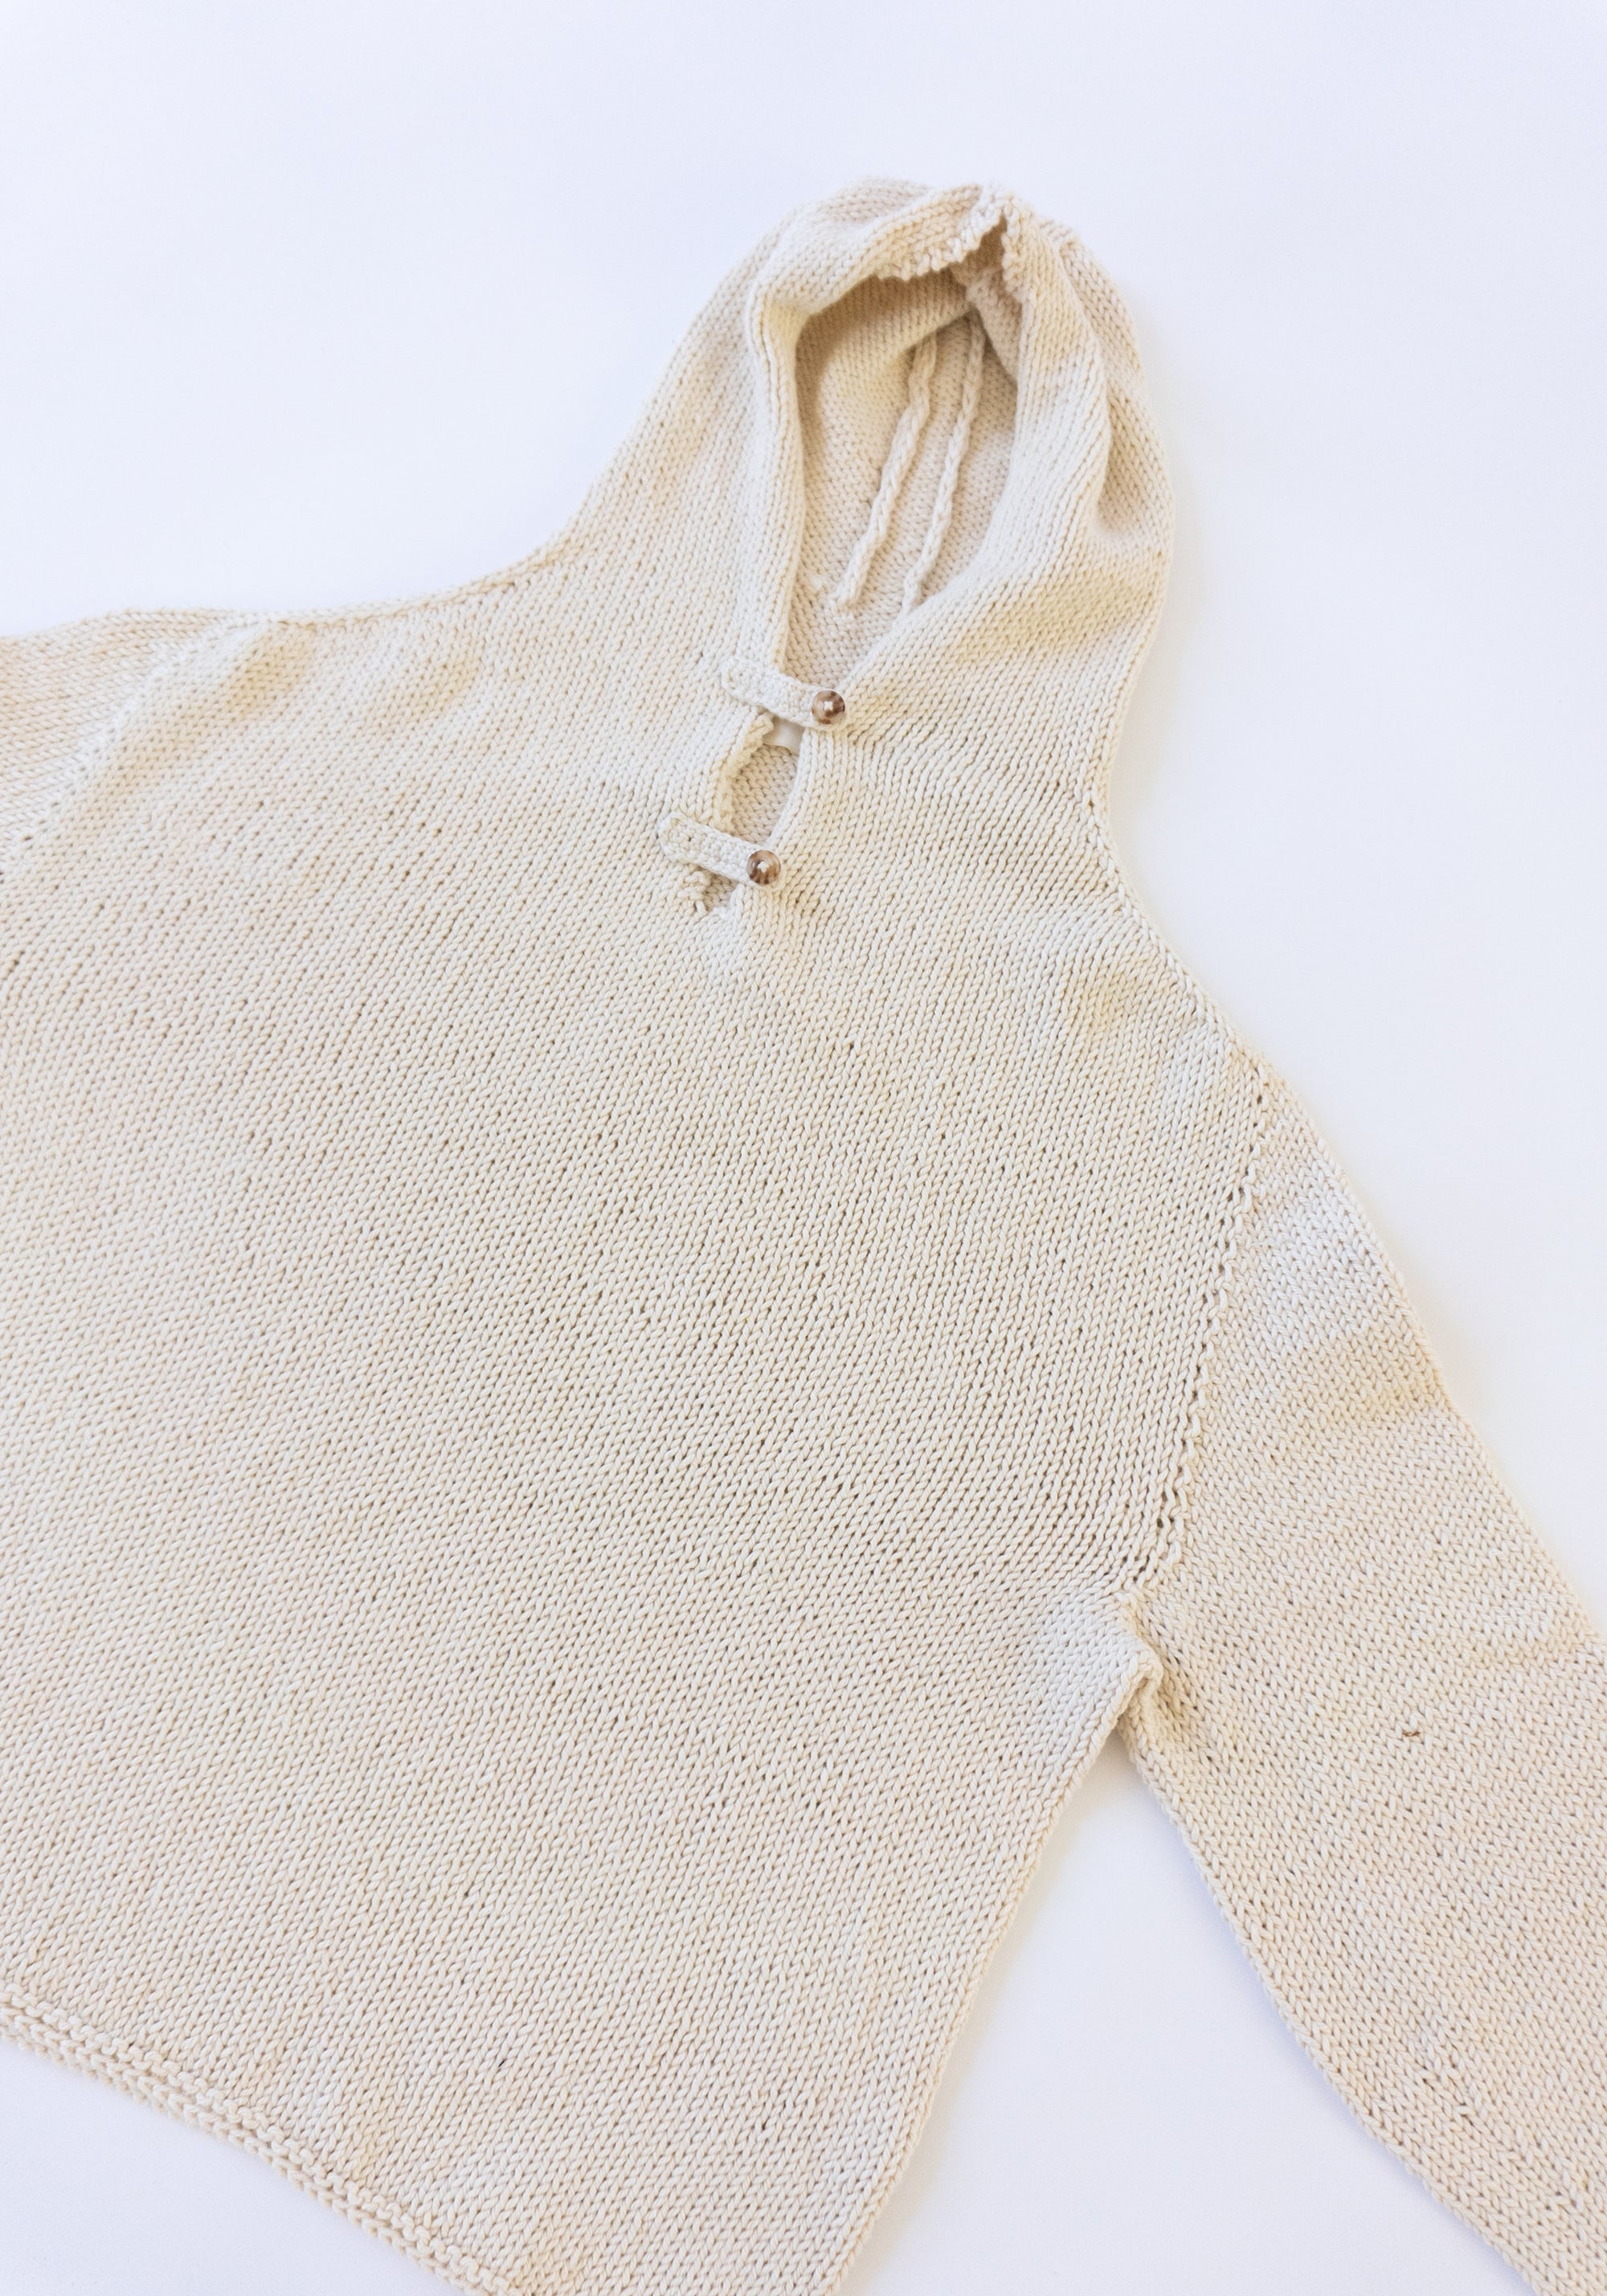 Calafate Sweater in Off White